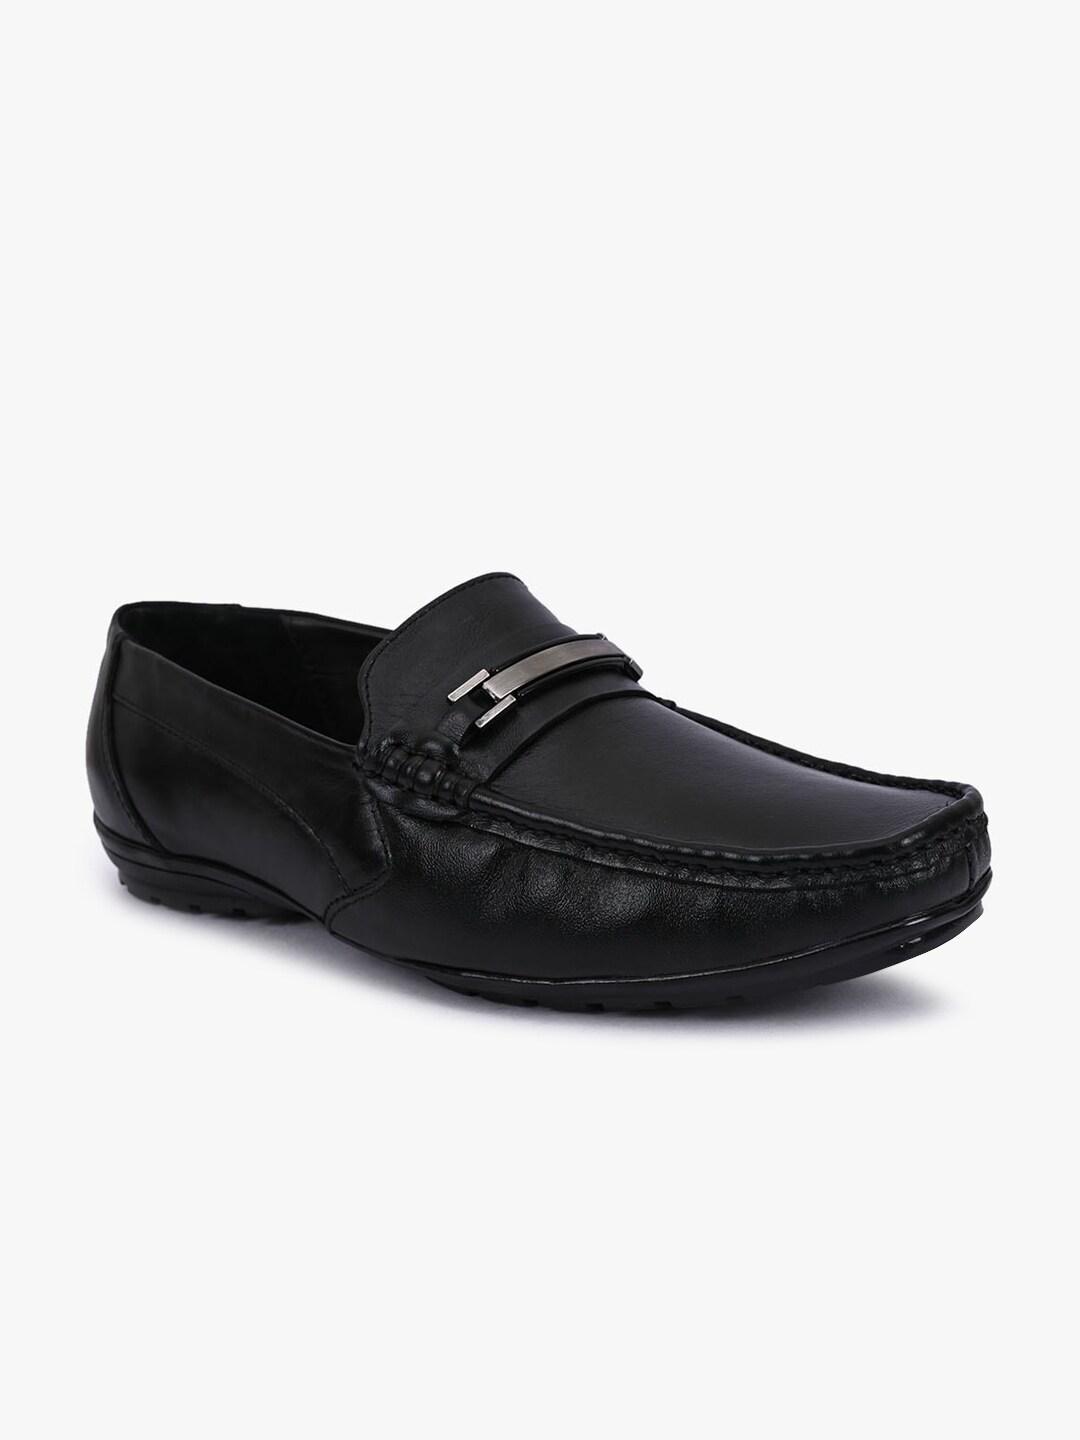 BuckleUp Men Black Solid Leather Formal Loafers